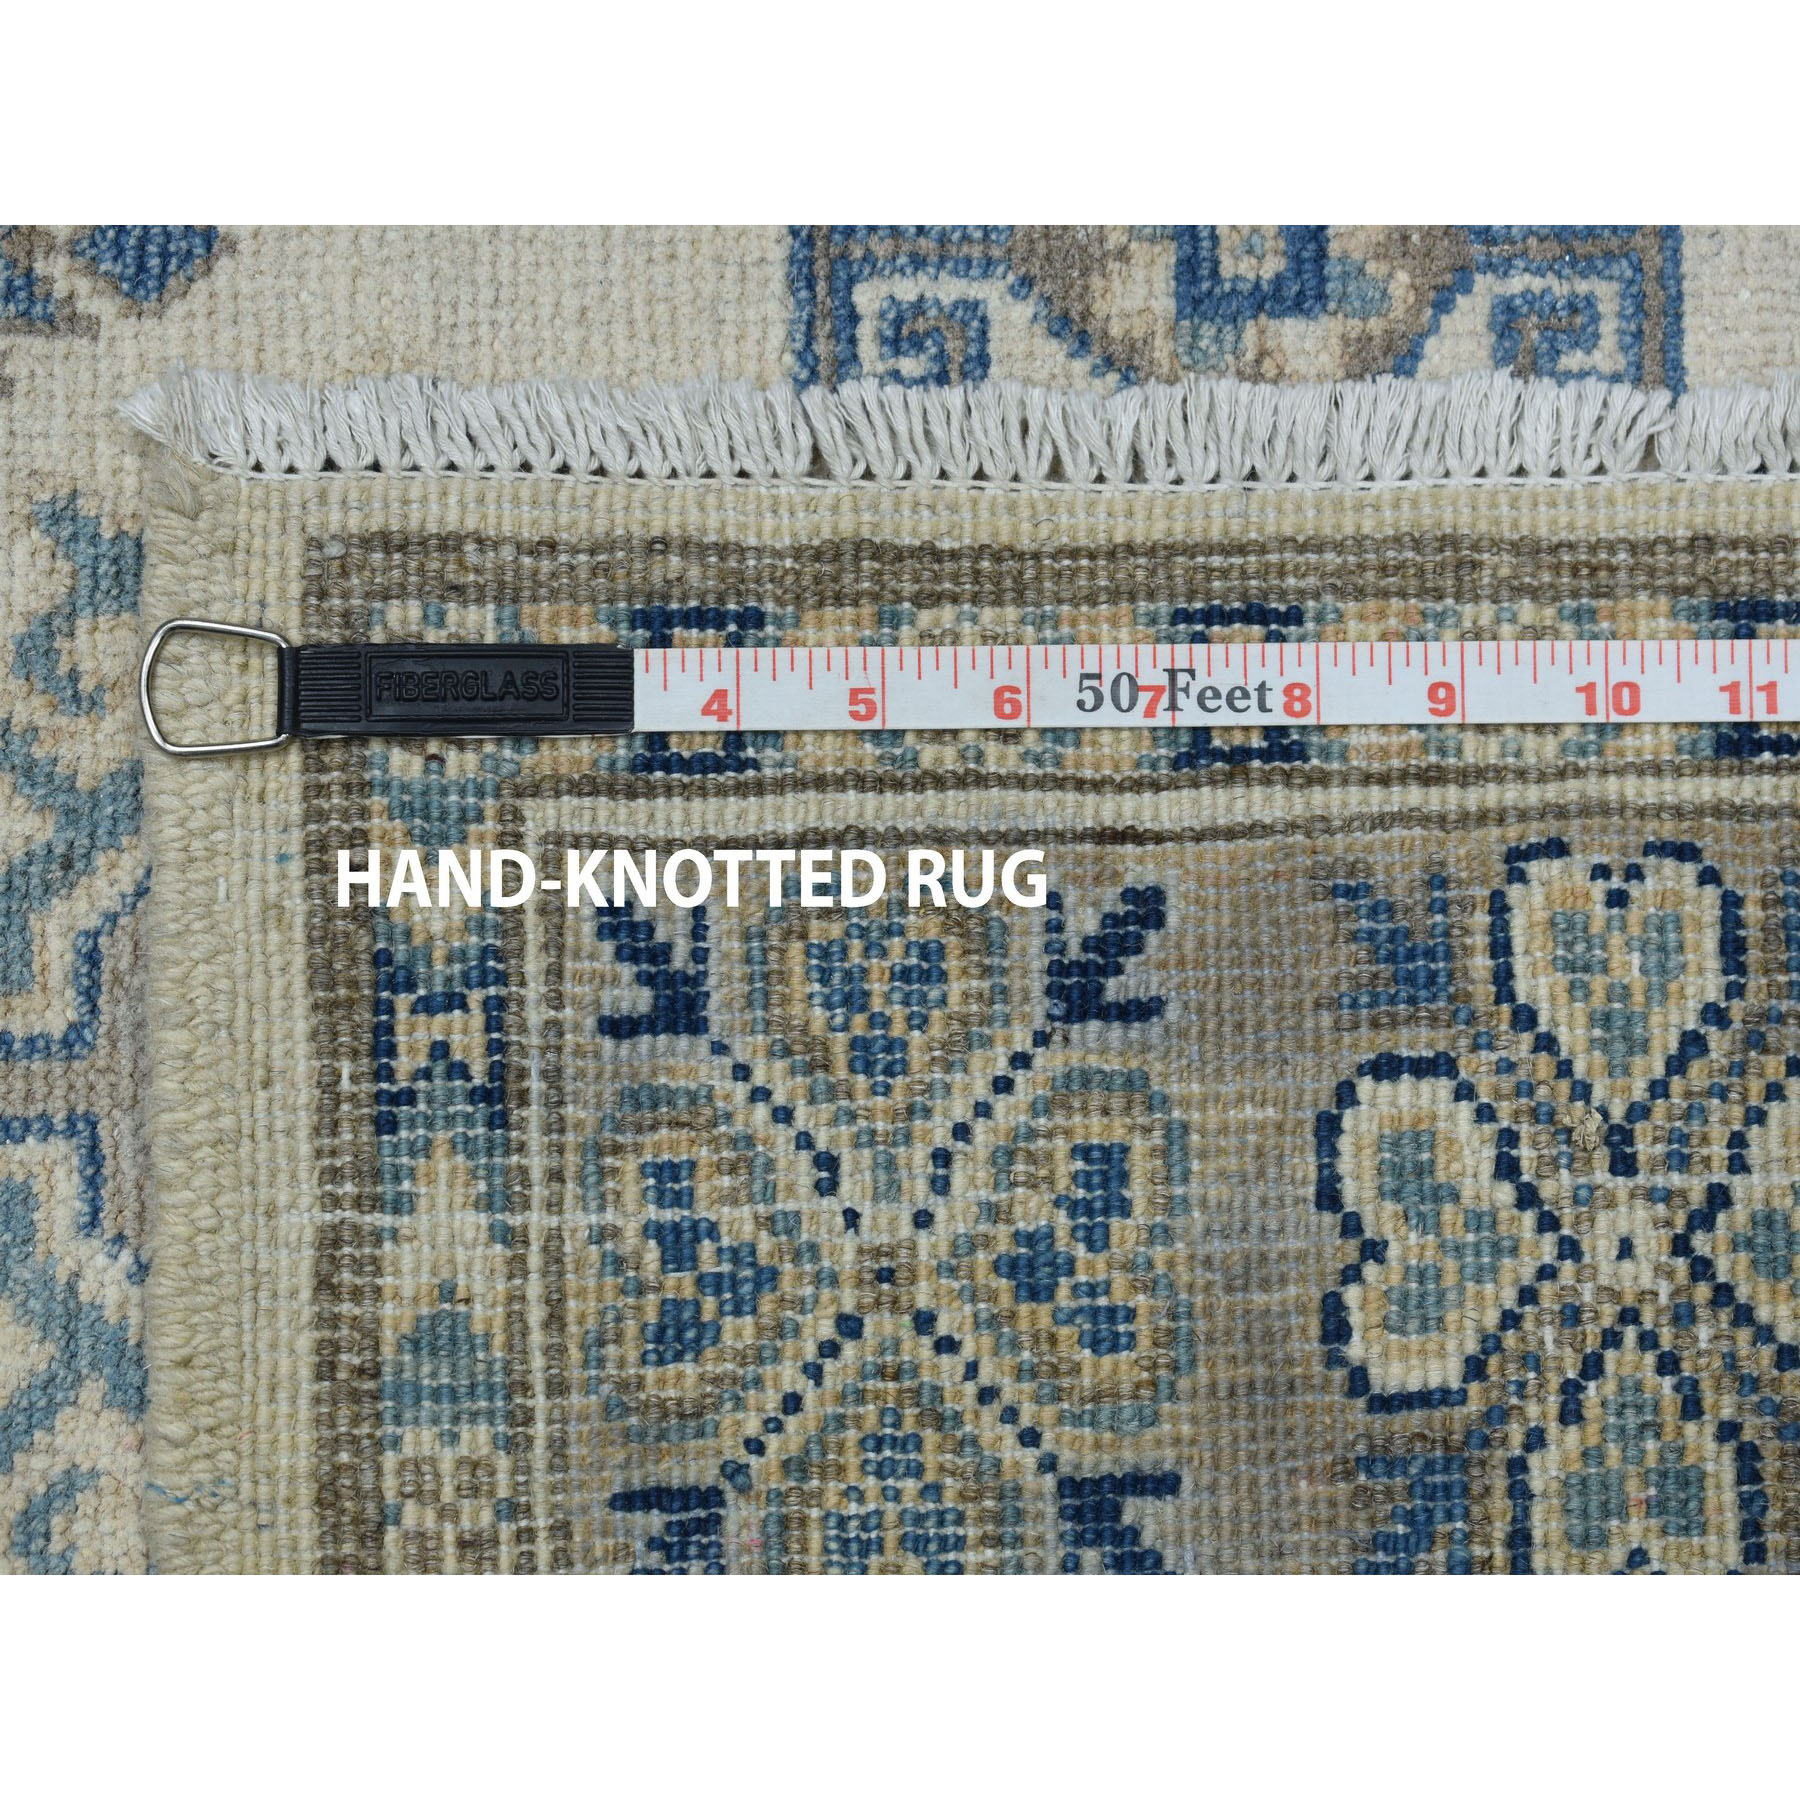 4'x6'1" Ivory Vintage Look Kazak Geometric Design Hand Woven Oriental Rug 